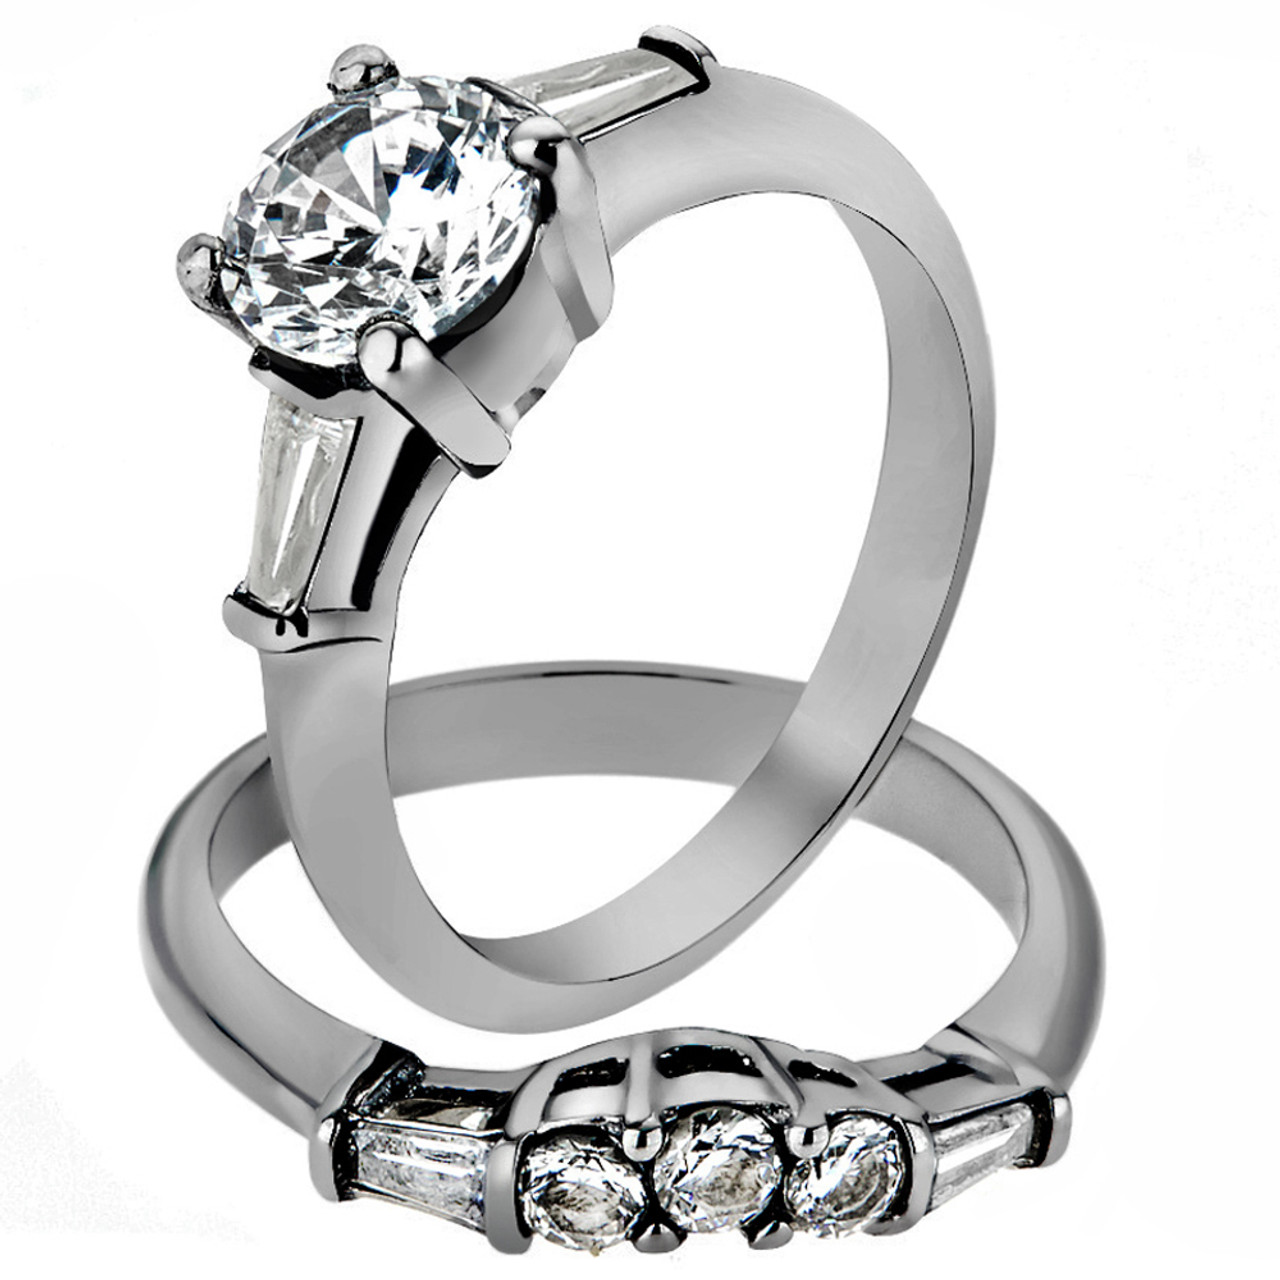 Stunning Emerald Cut AAA CZ Stainless Steel Wedding Engagement Ring Set Sz 5-10 